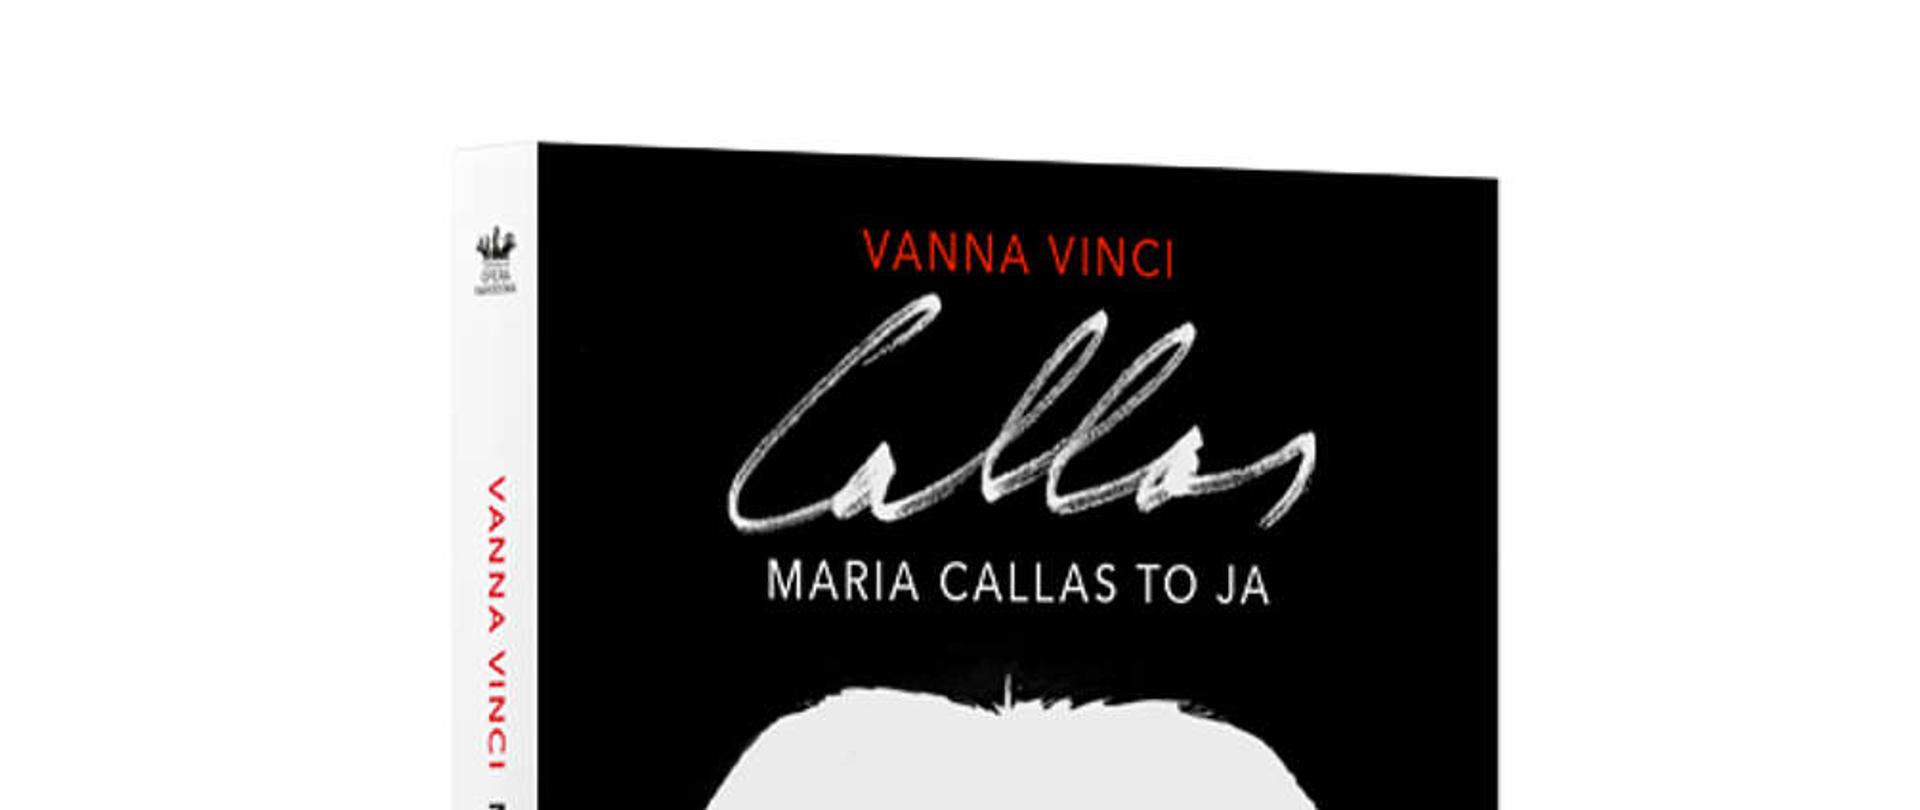 „Maria Callas to ja”